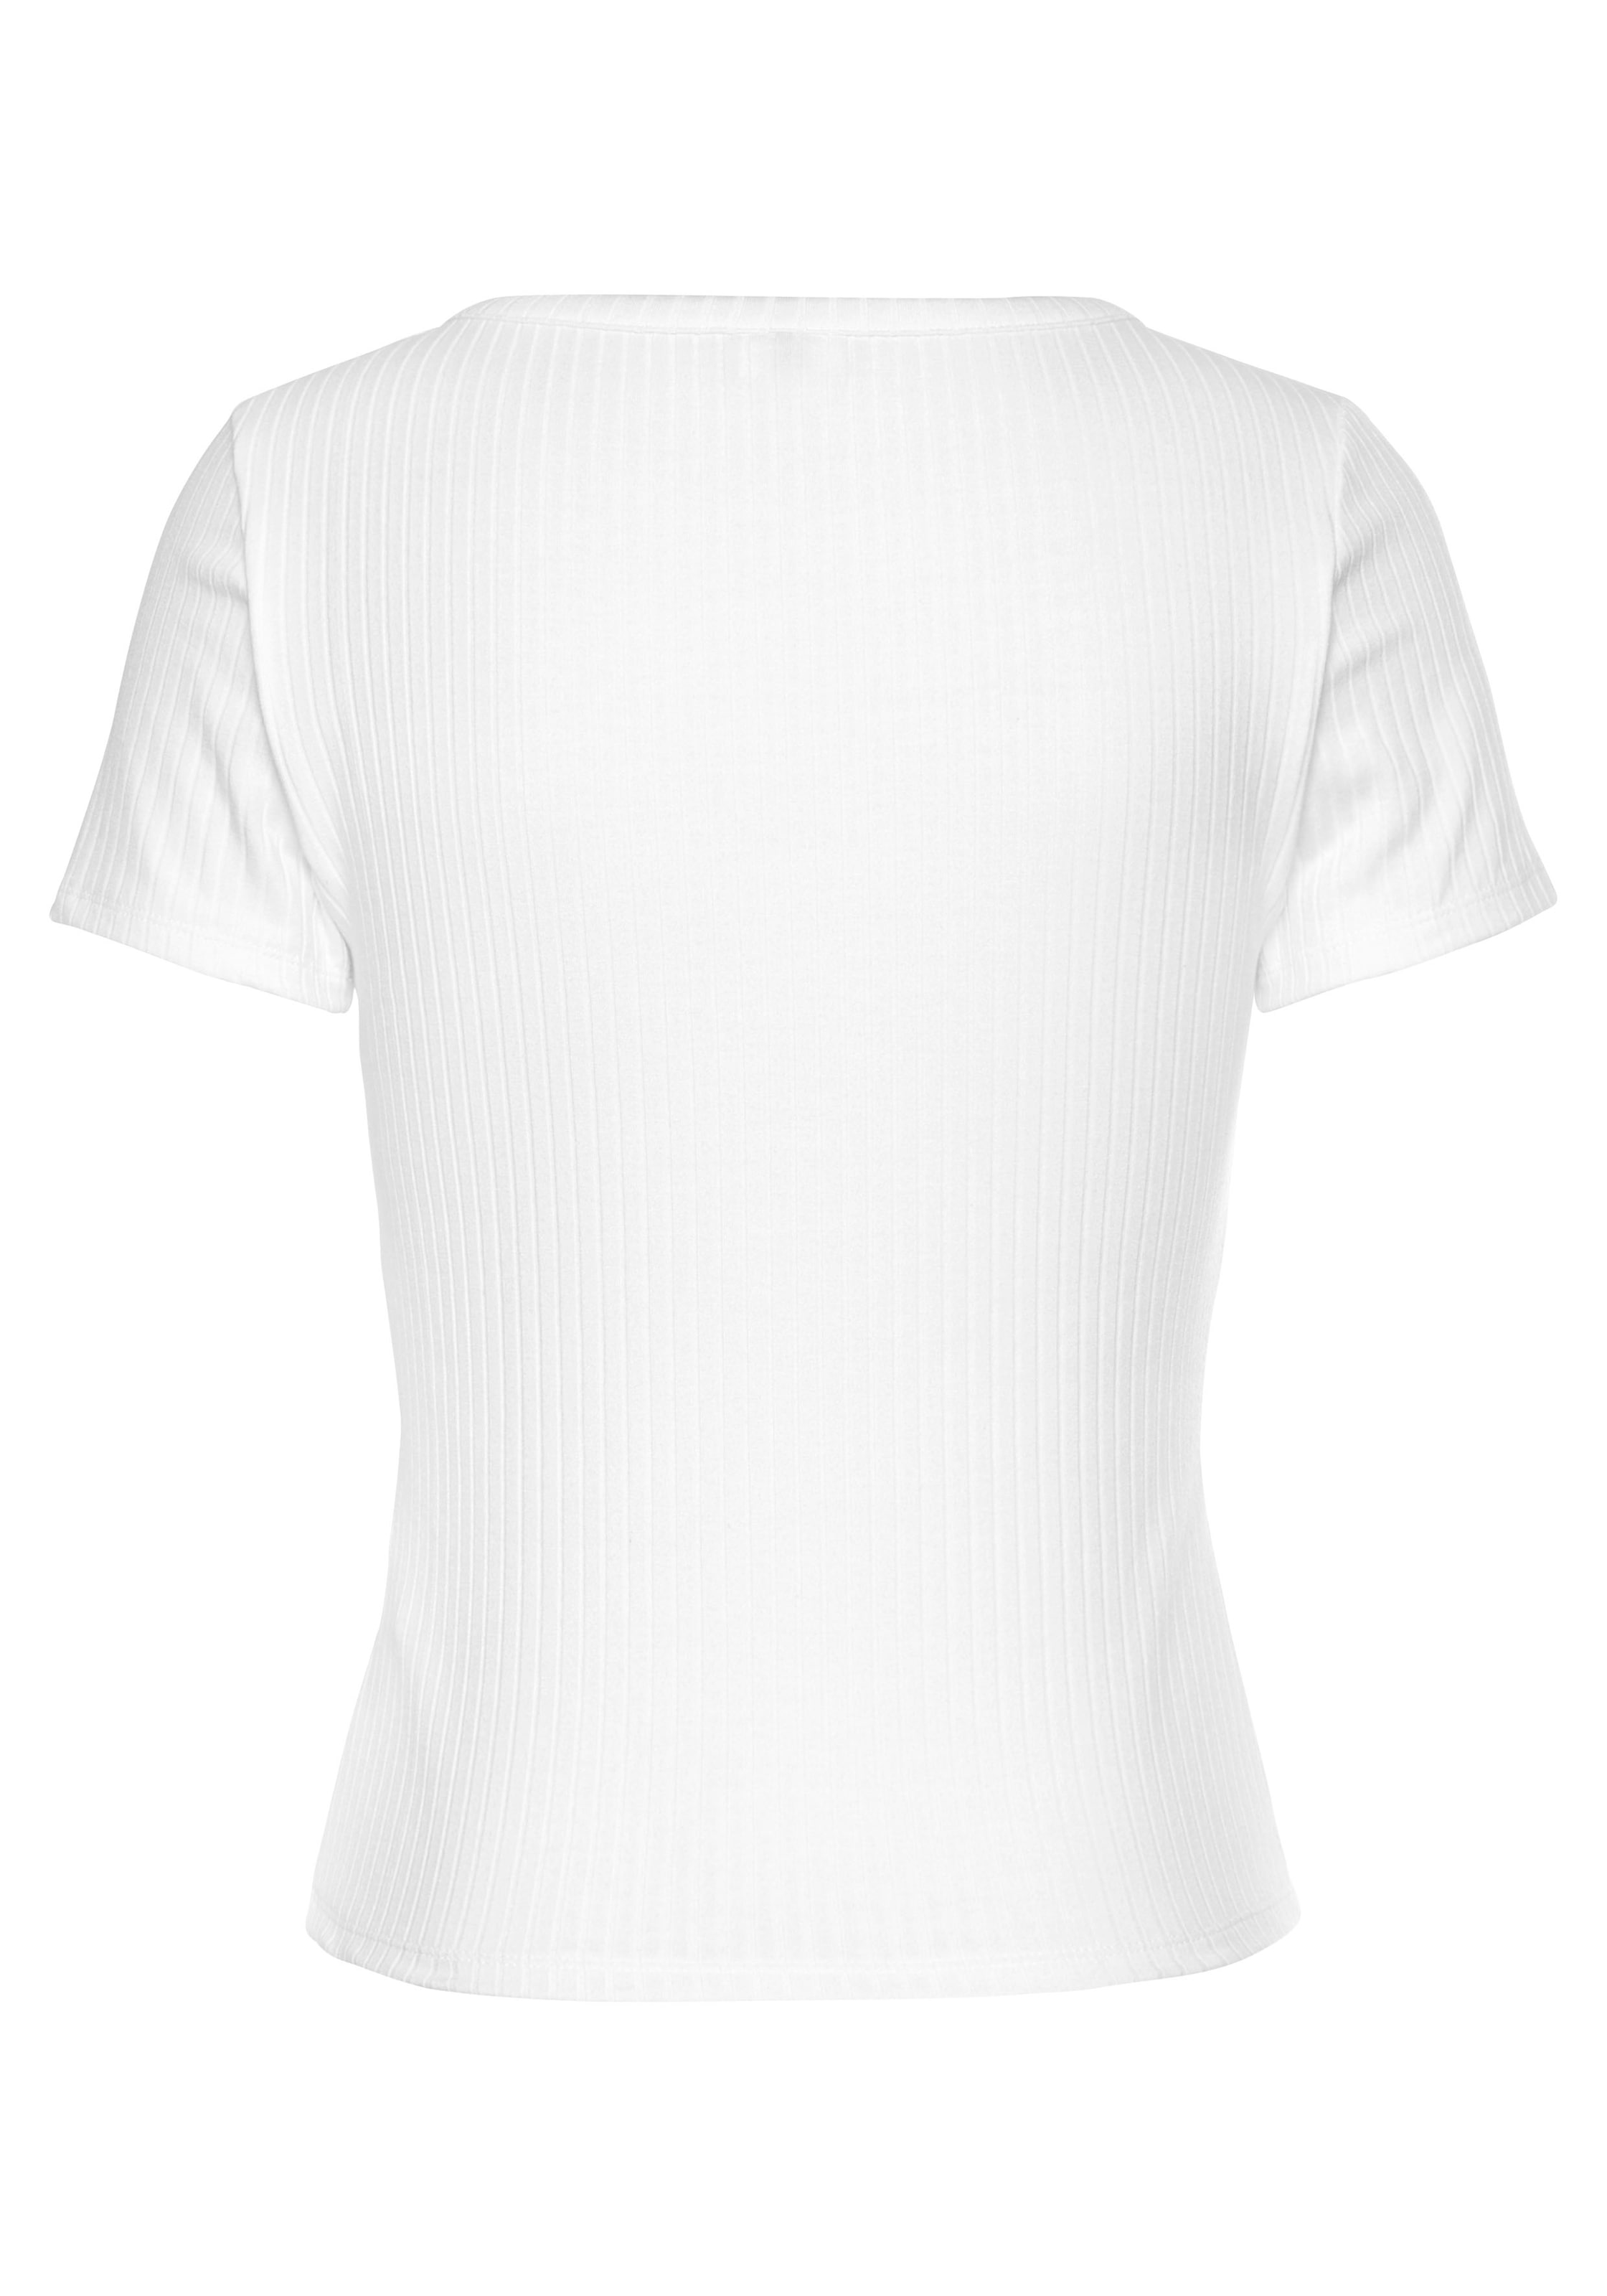 LASCANA Kurzarmshirt, aus OTTO Shop Rippware Zierknopfleiste, V-Ausschnitt im Online mit T-Shirt